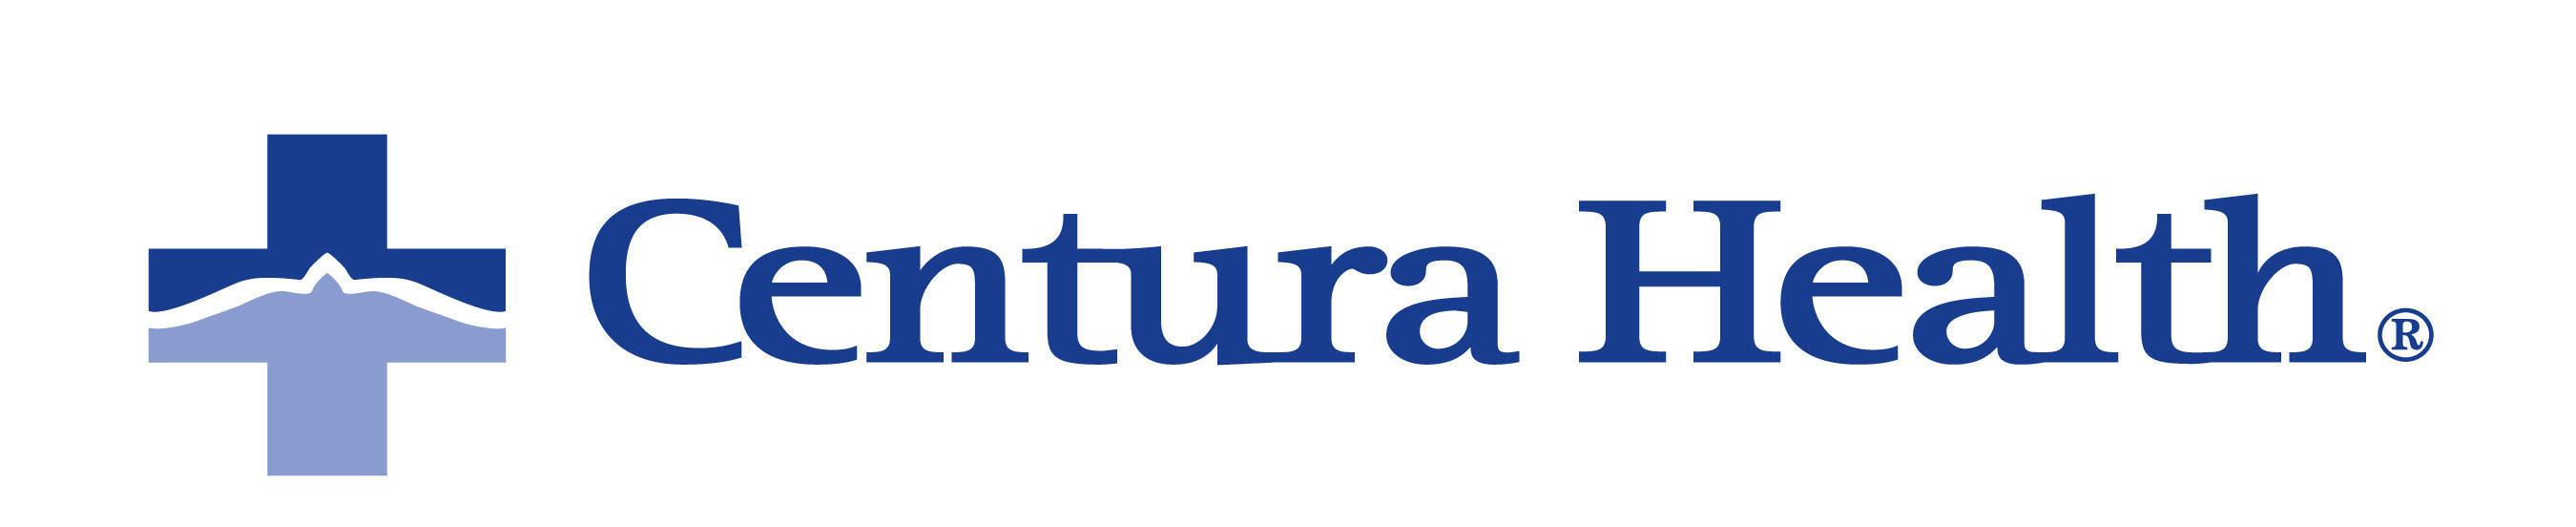 Centura Health Logo.